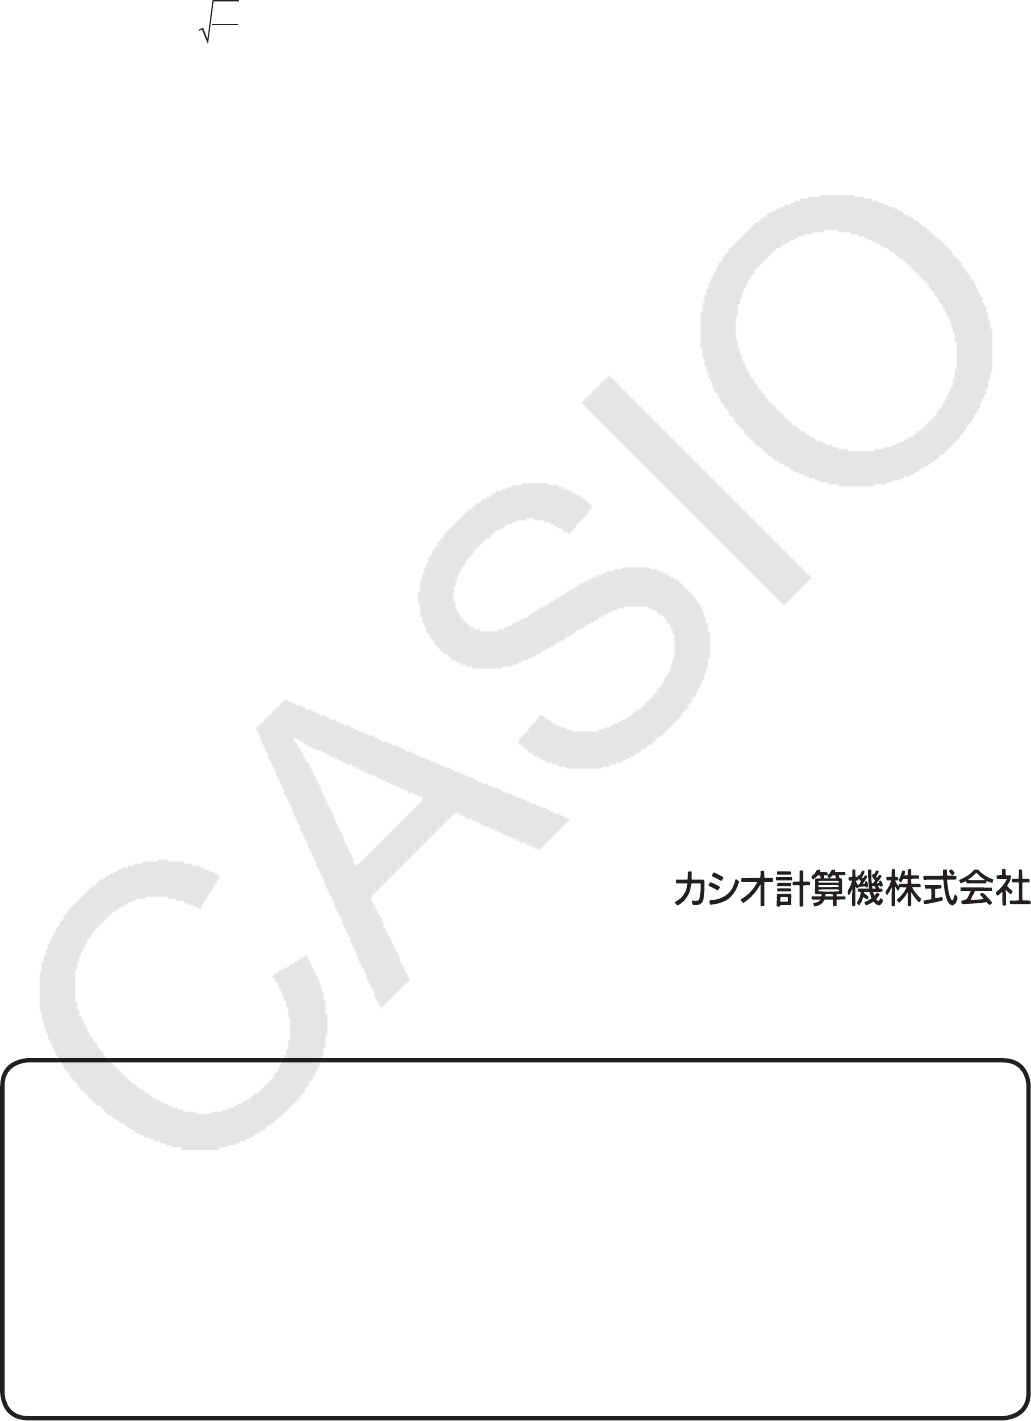 Casio Fx 530az テキスト Txt Ja